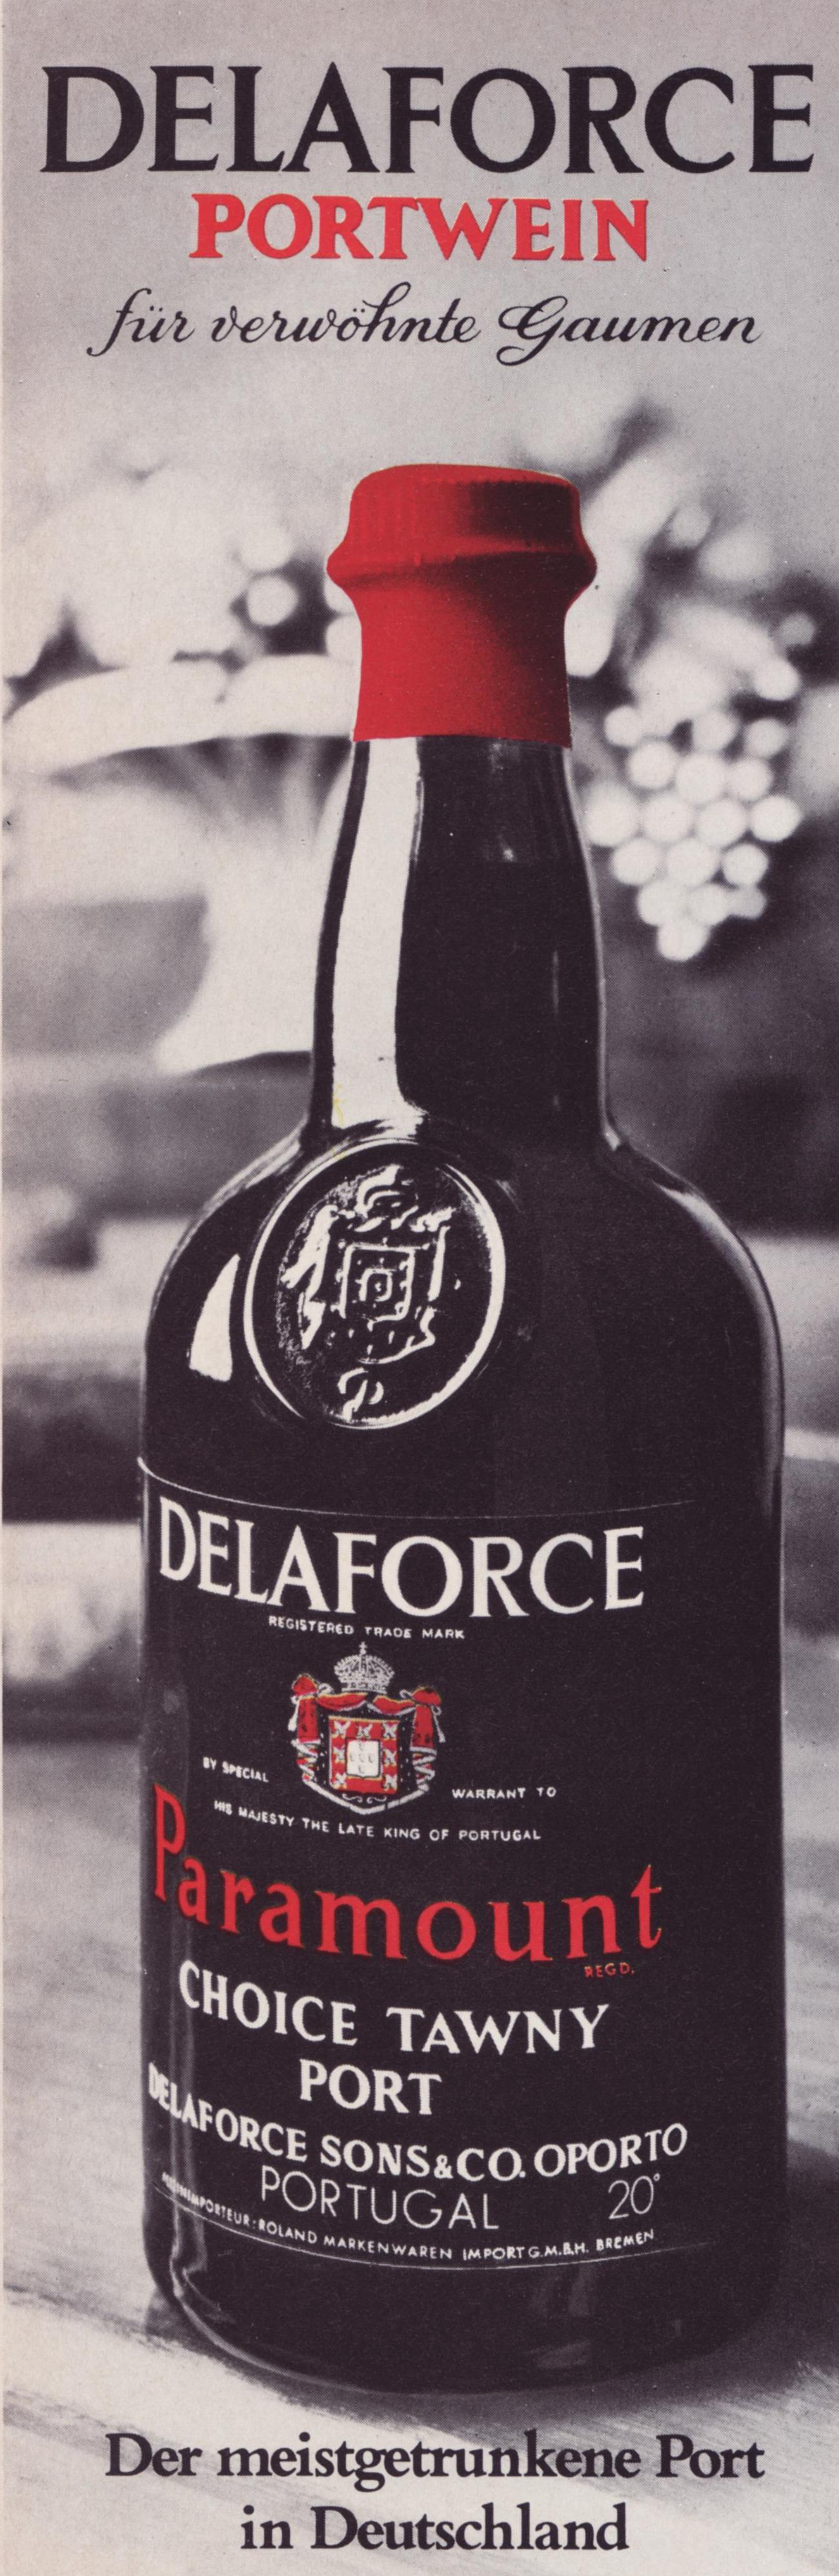 Delaforce 1973.jpg